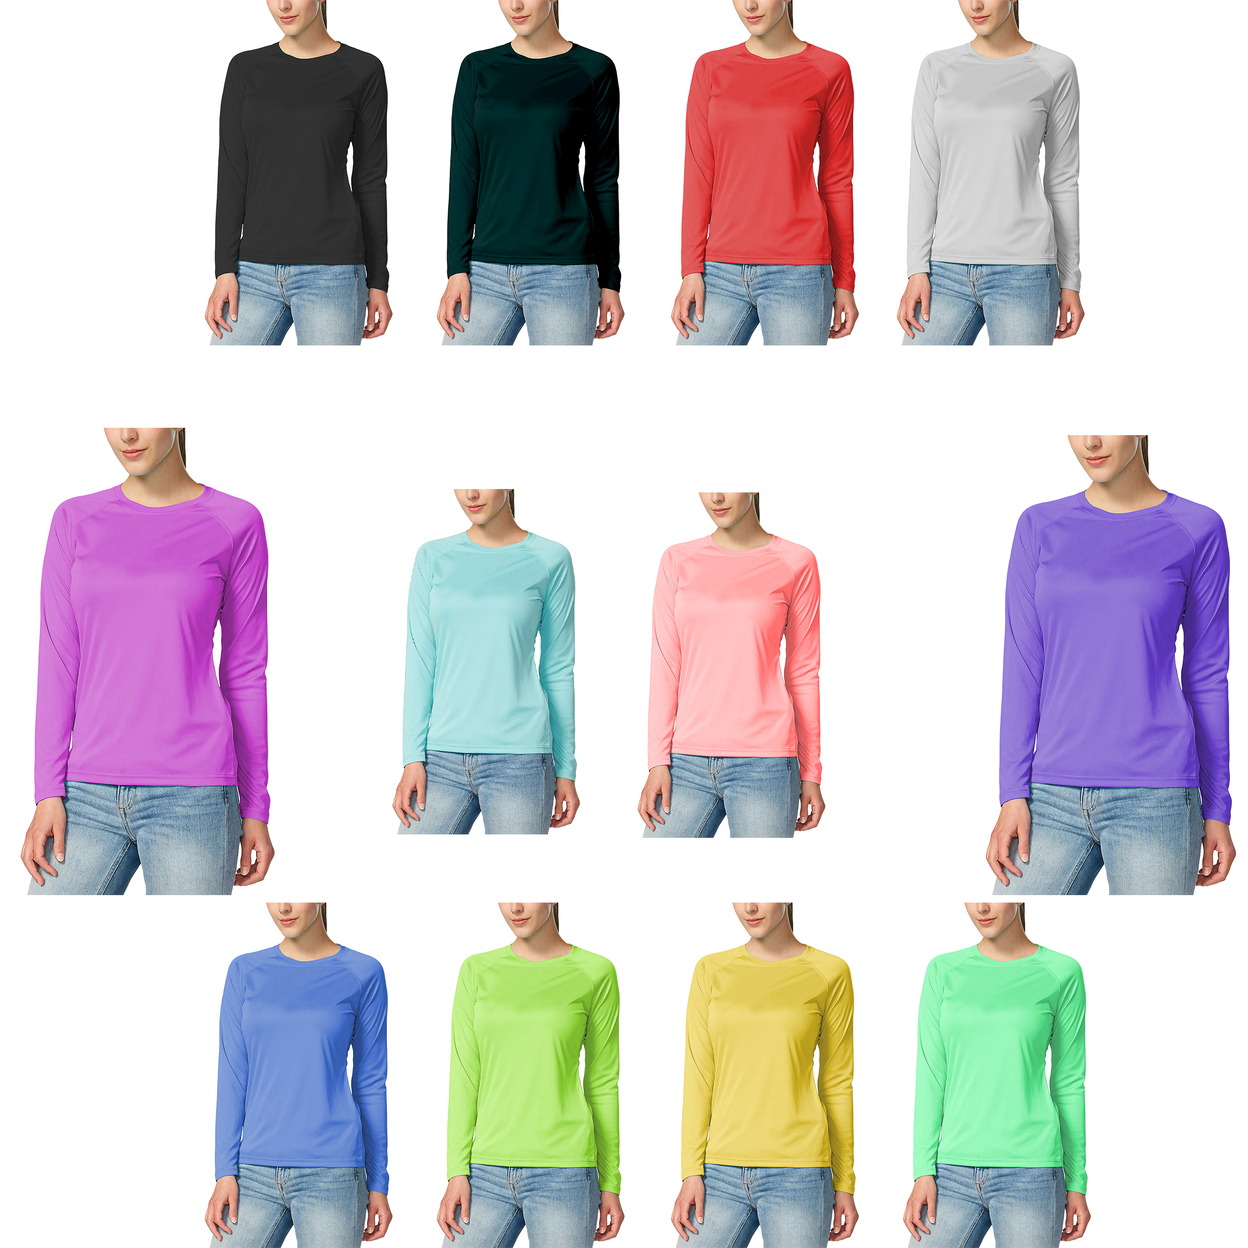 4-Pack: Women's Dri-Fit Moisture-Wicking Breathable Long Sleeve T-Shirt - Medium